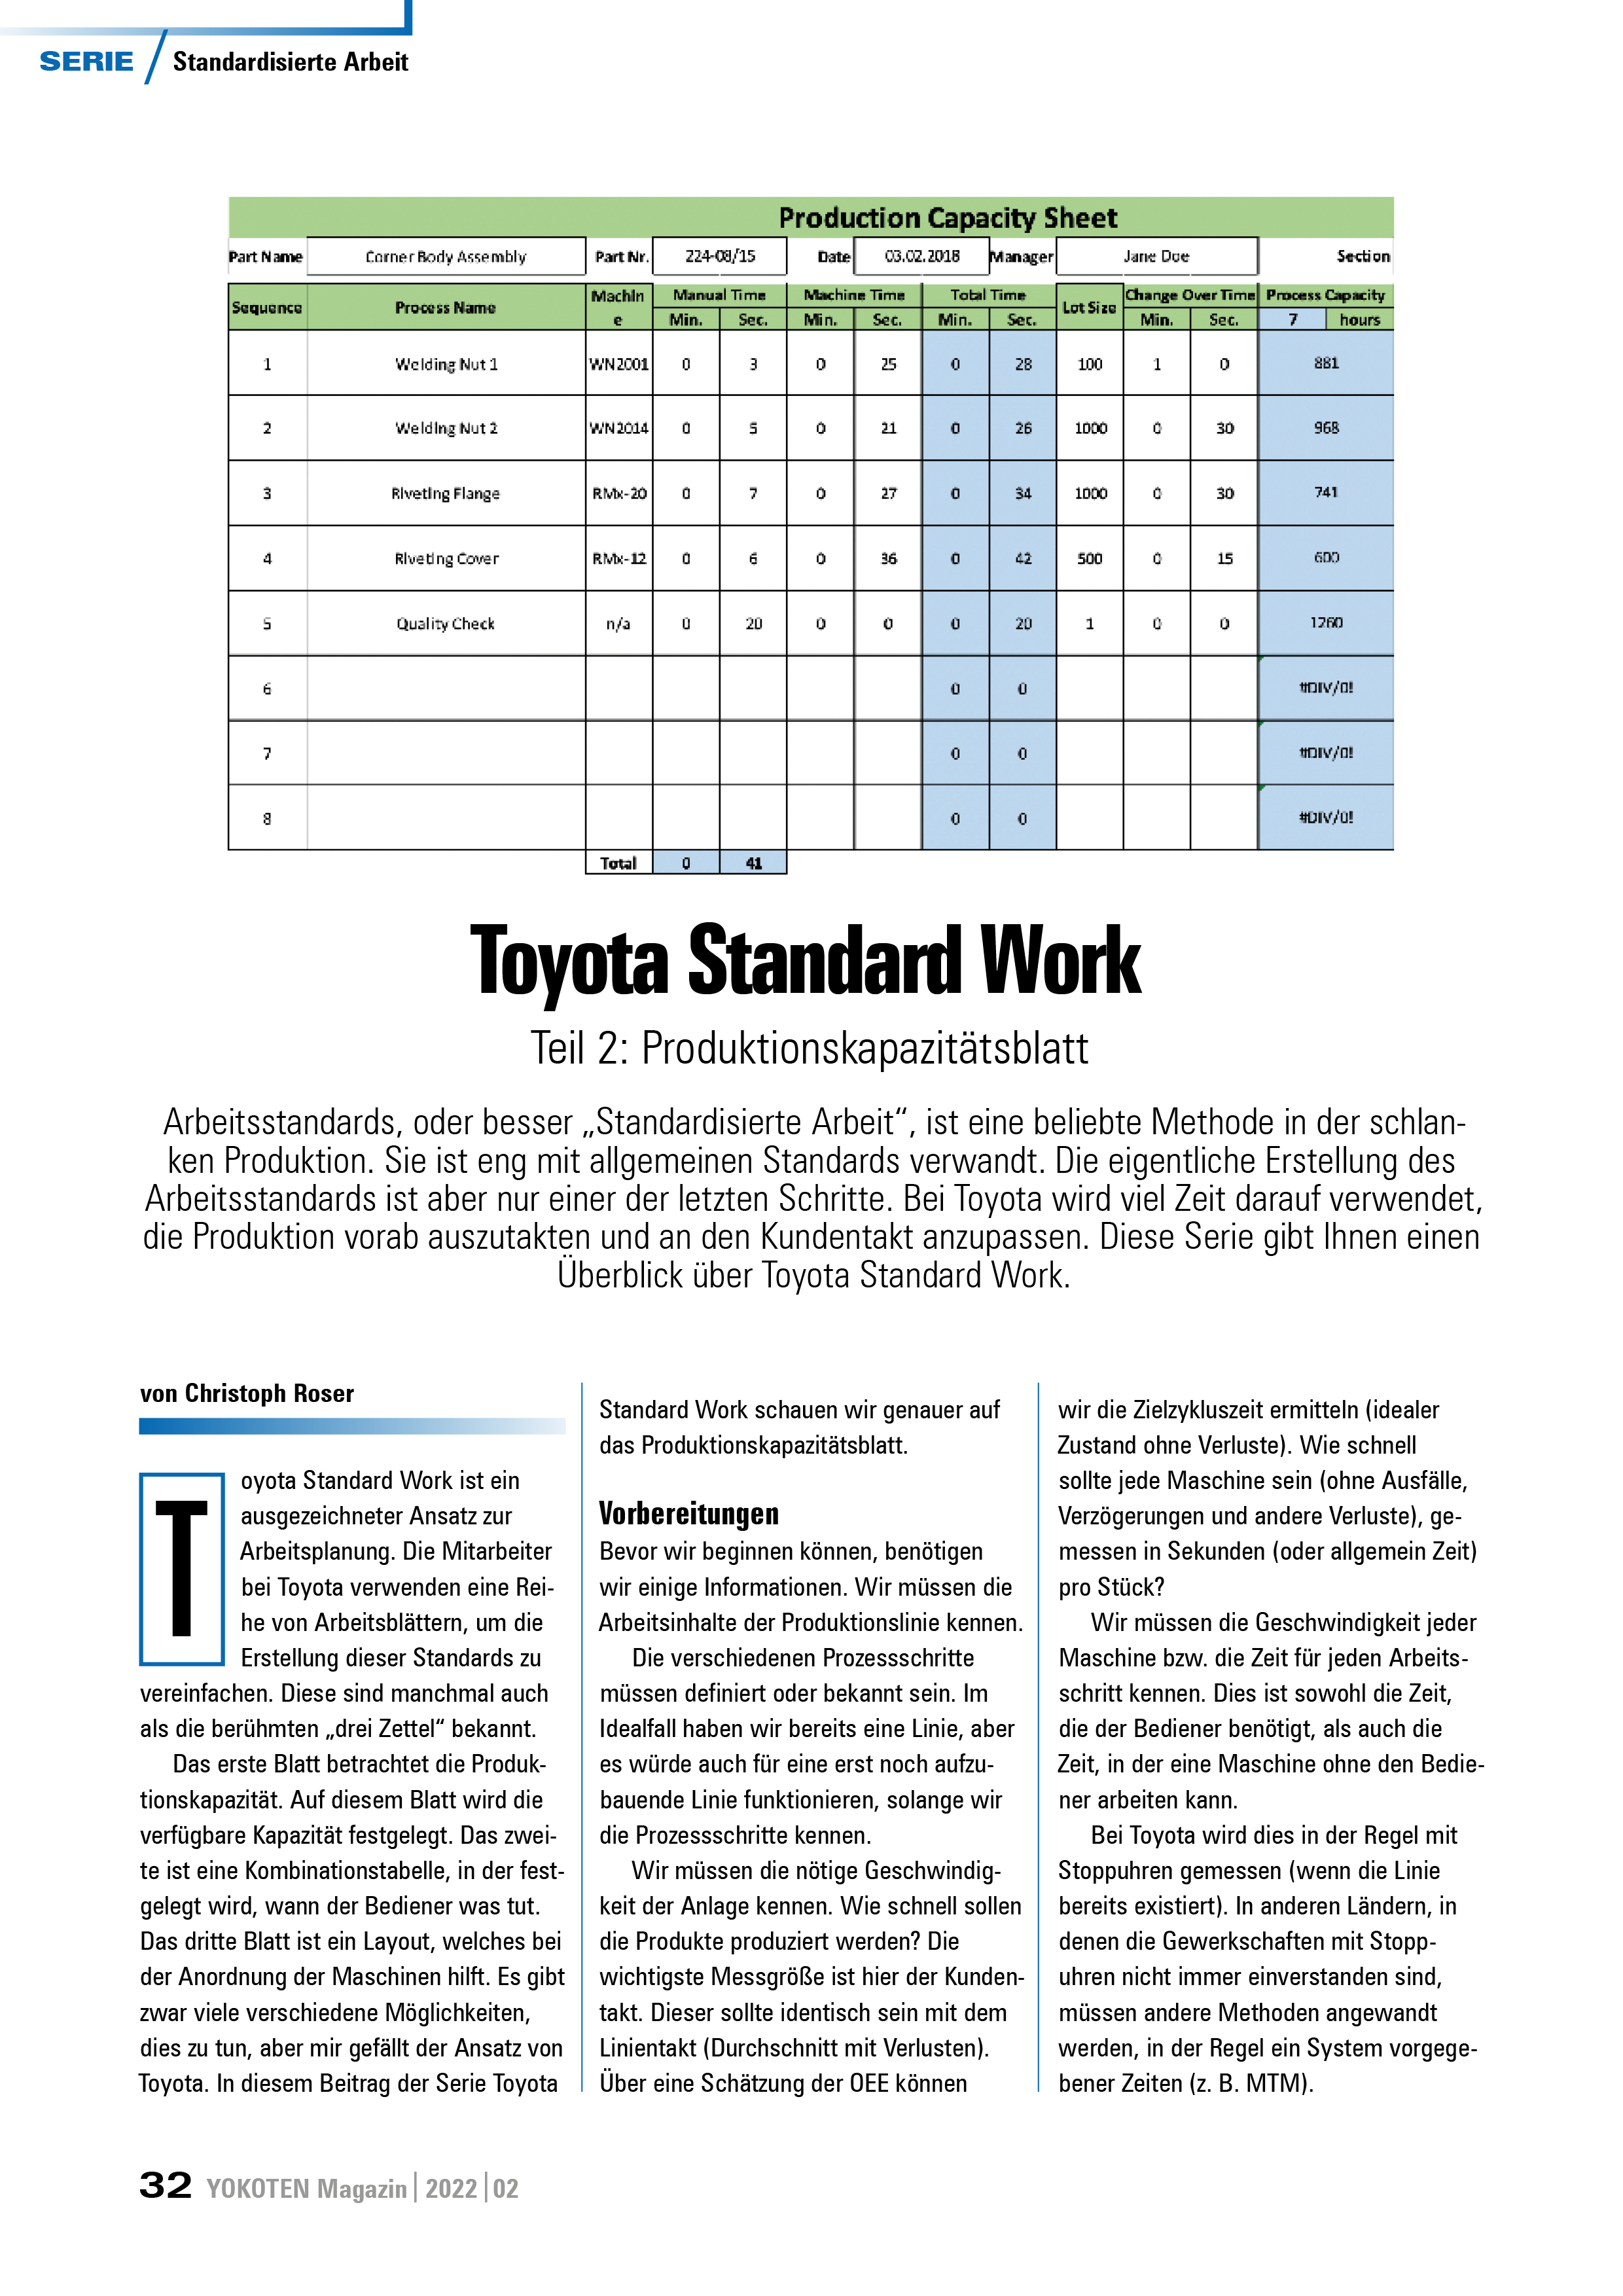 Toyota Standard Work - Artikel aus Fachmagazin YOKOTEN 2022-02